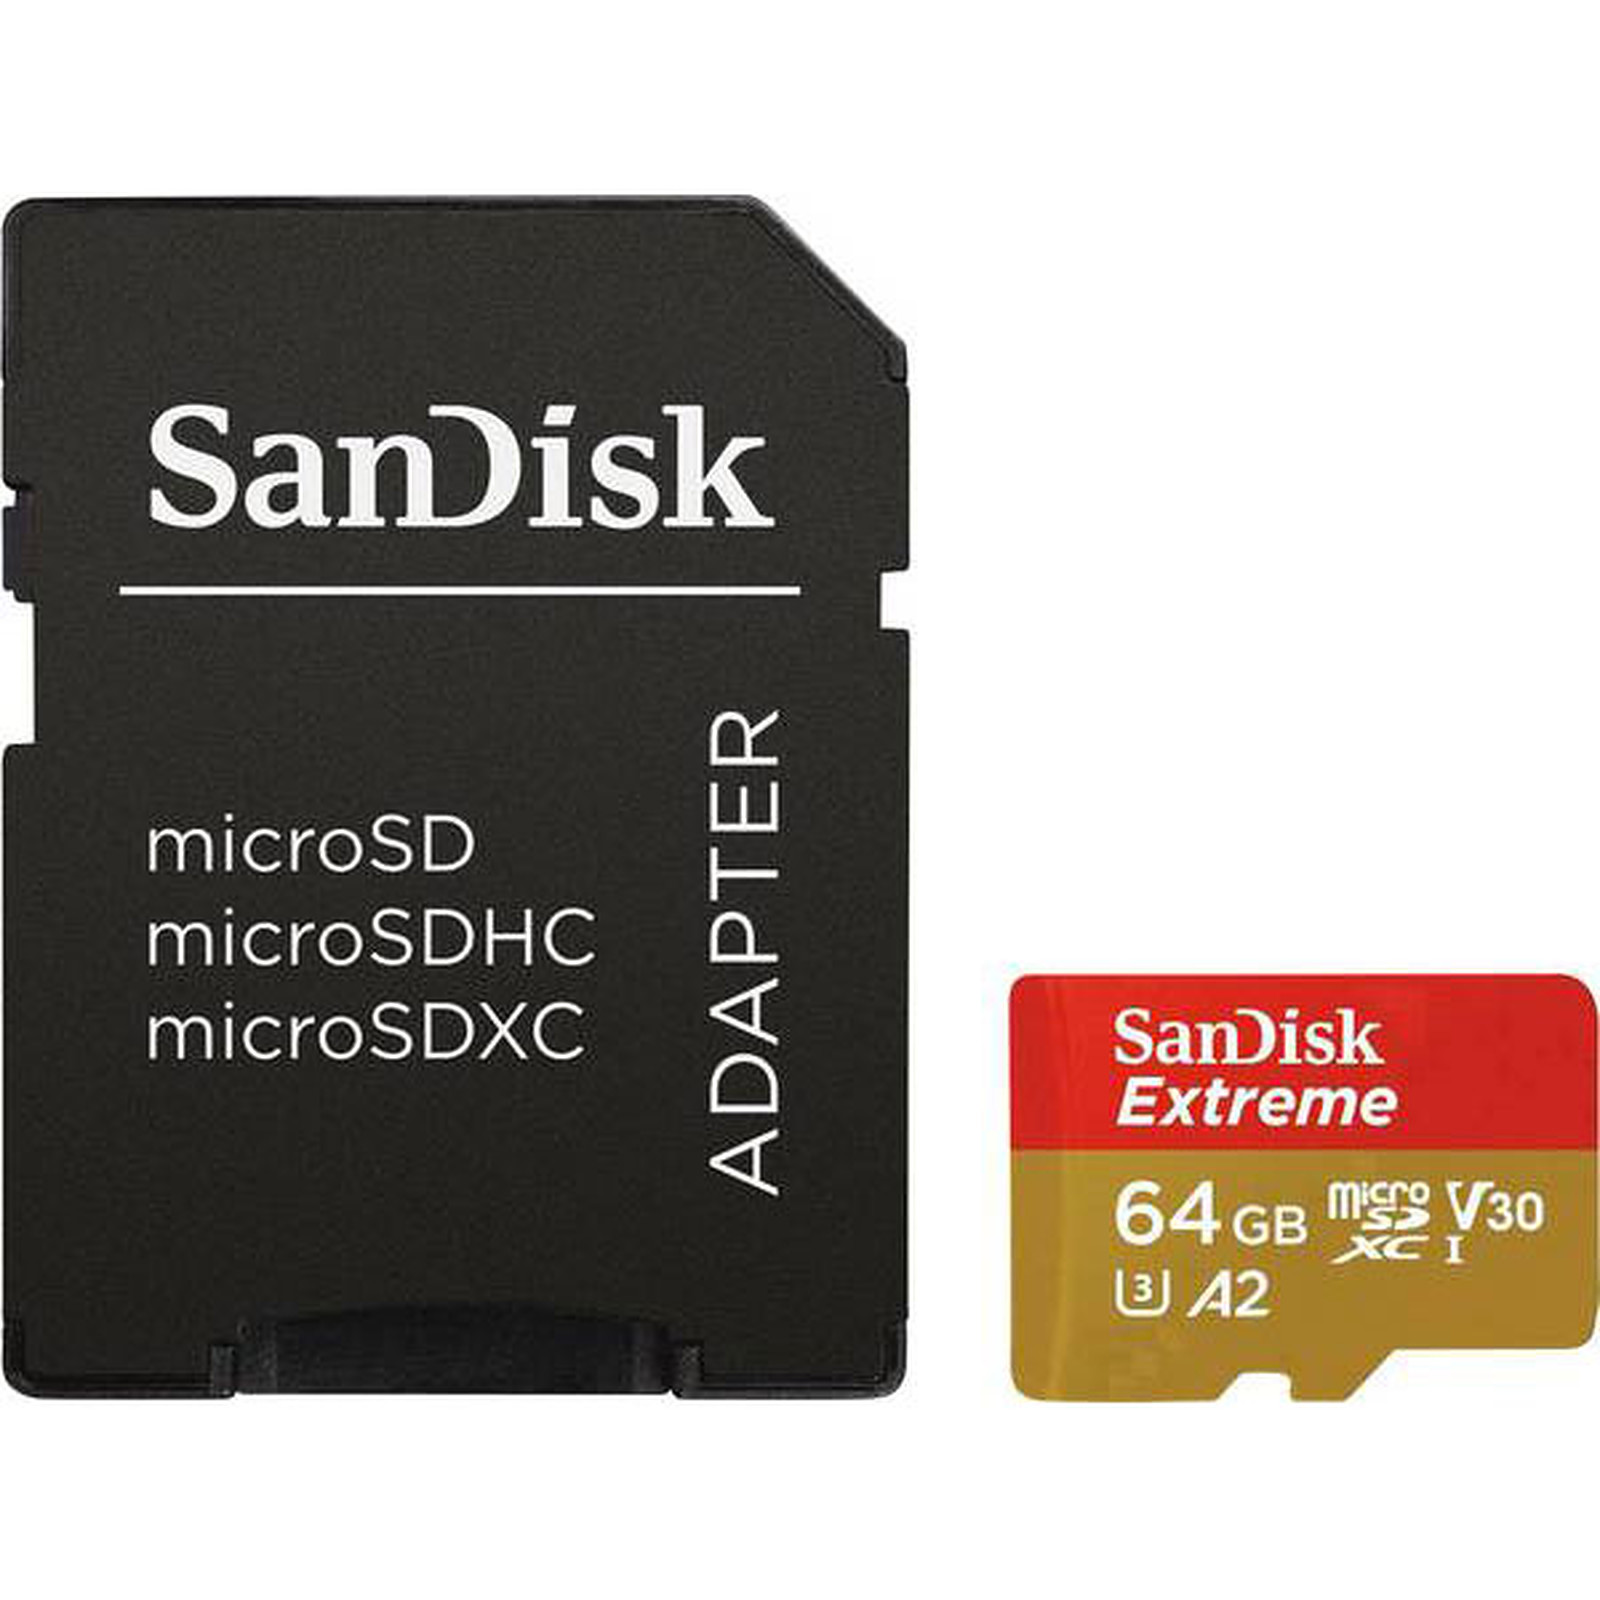 SanDisk Extreme microSDXC UHS-I U3 A2 V30 64 Go + Adaptateur SD - Carte memoire Sandisk